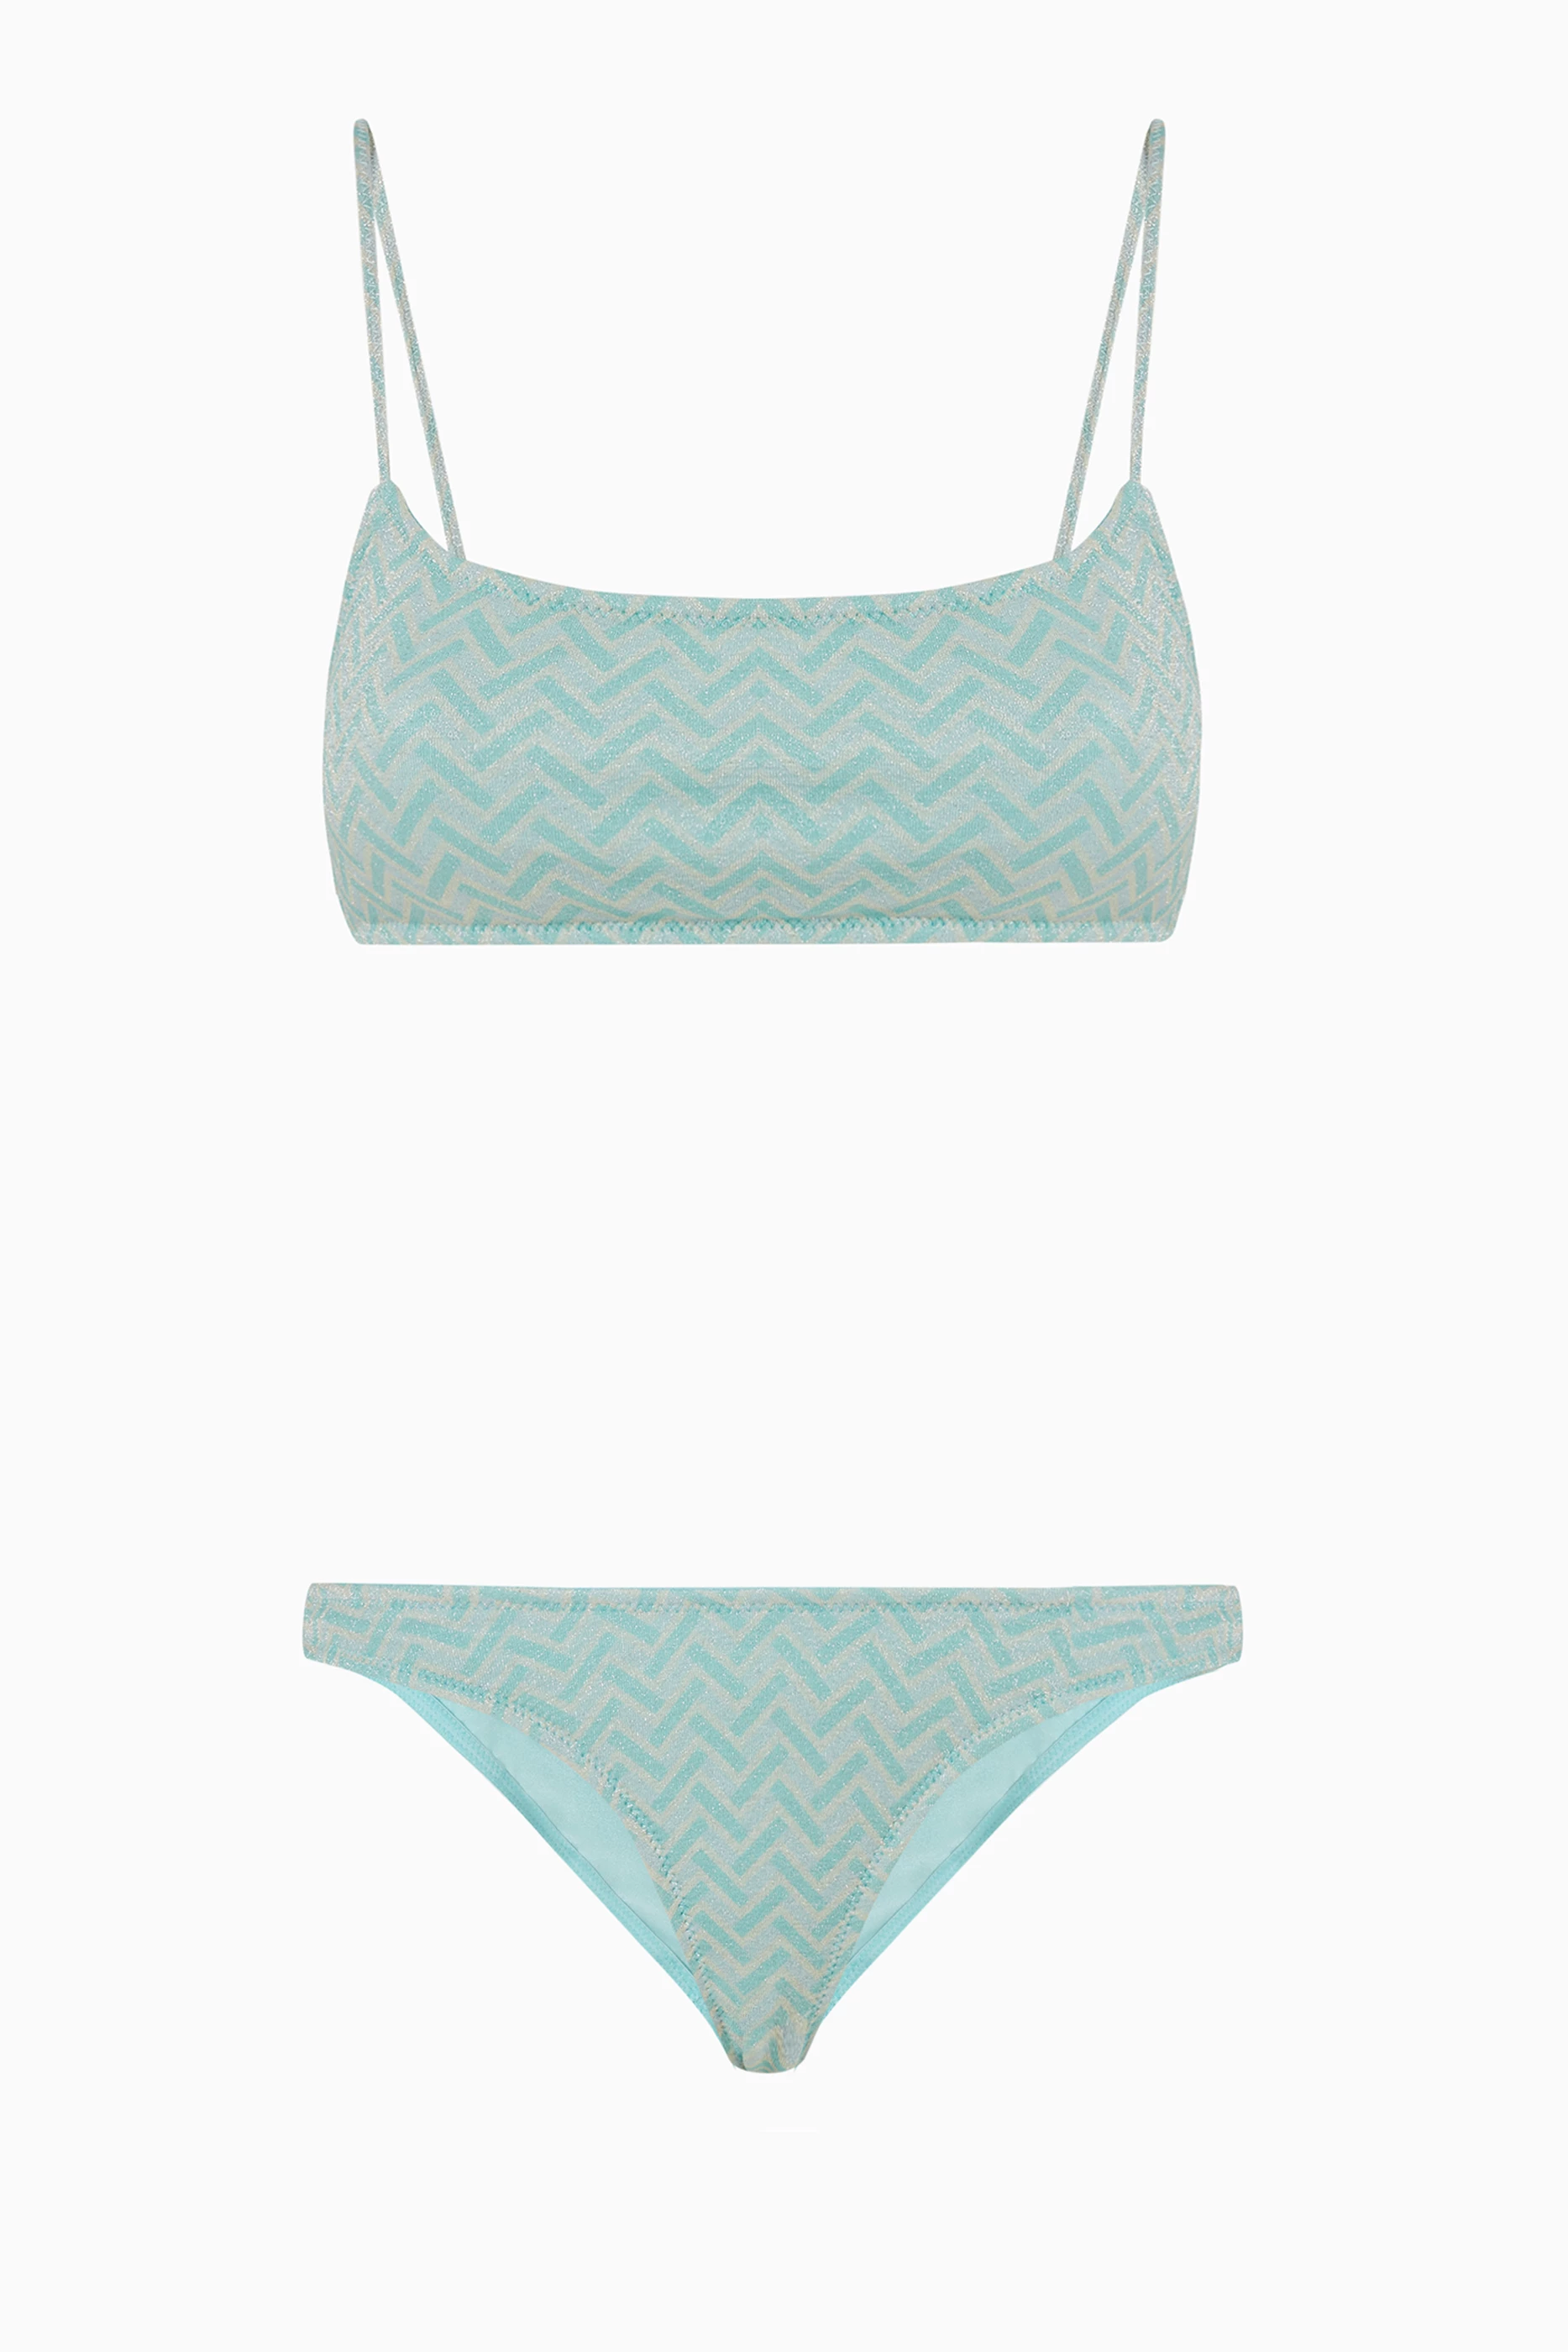 Triangl bikini mica sparkle Green Size M - $80 (27% Off Retail) - From Ava